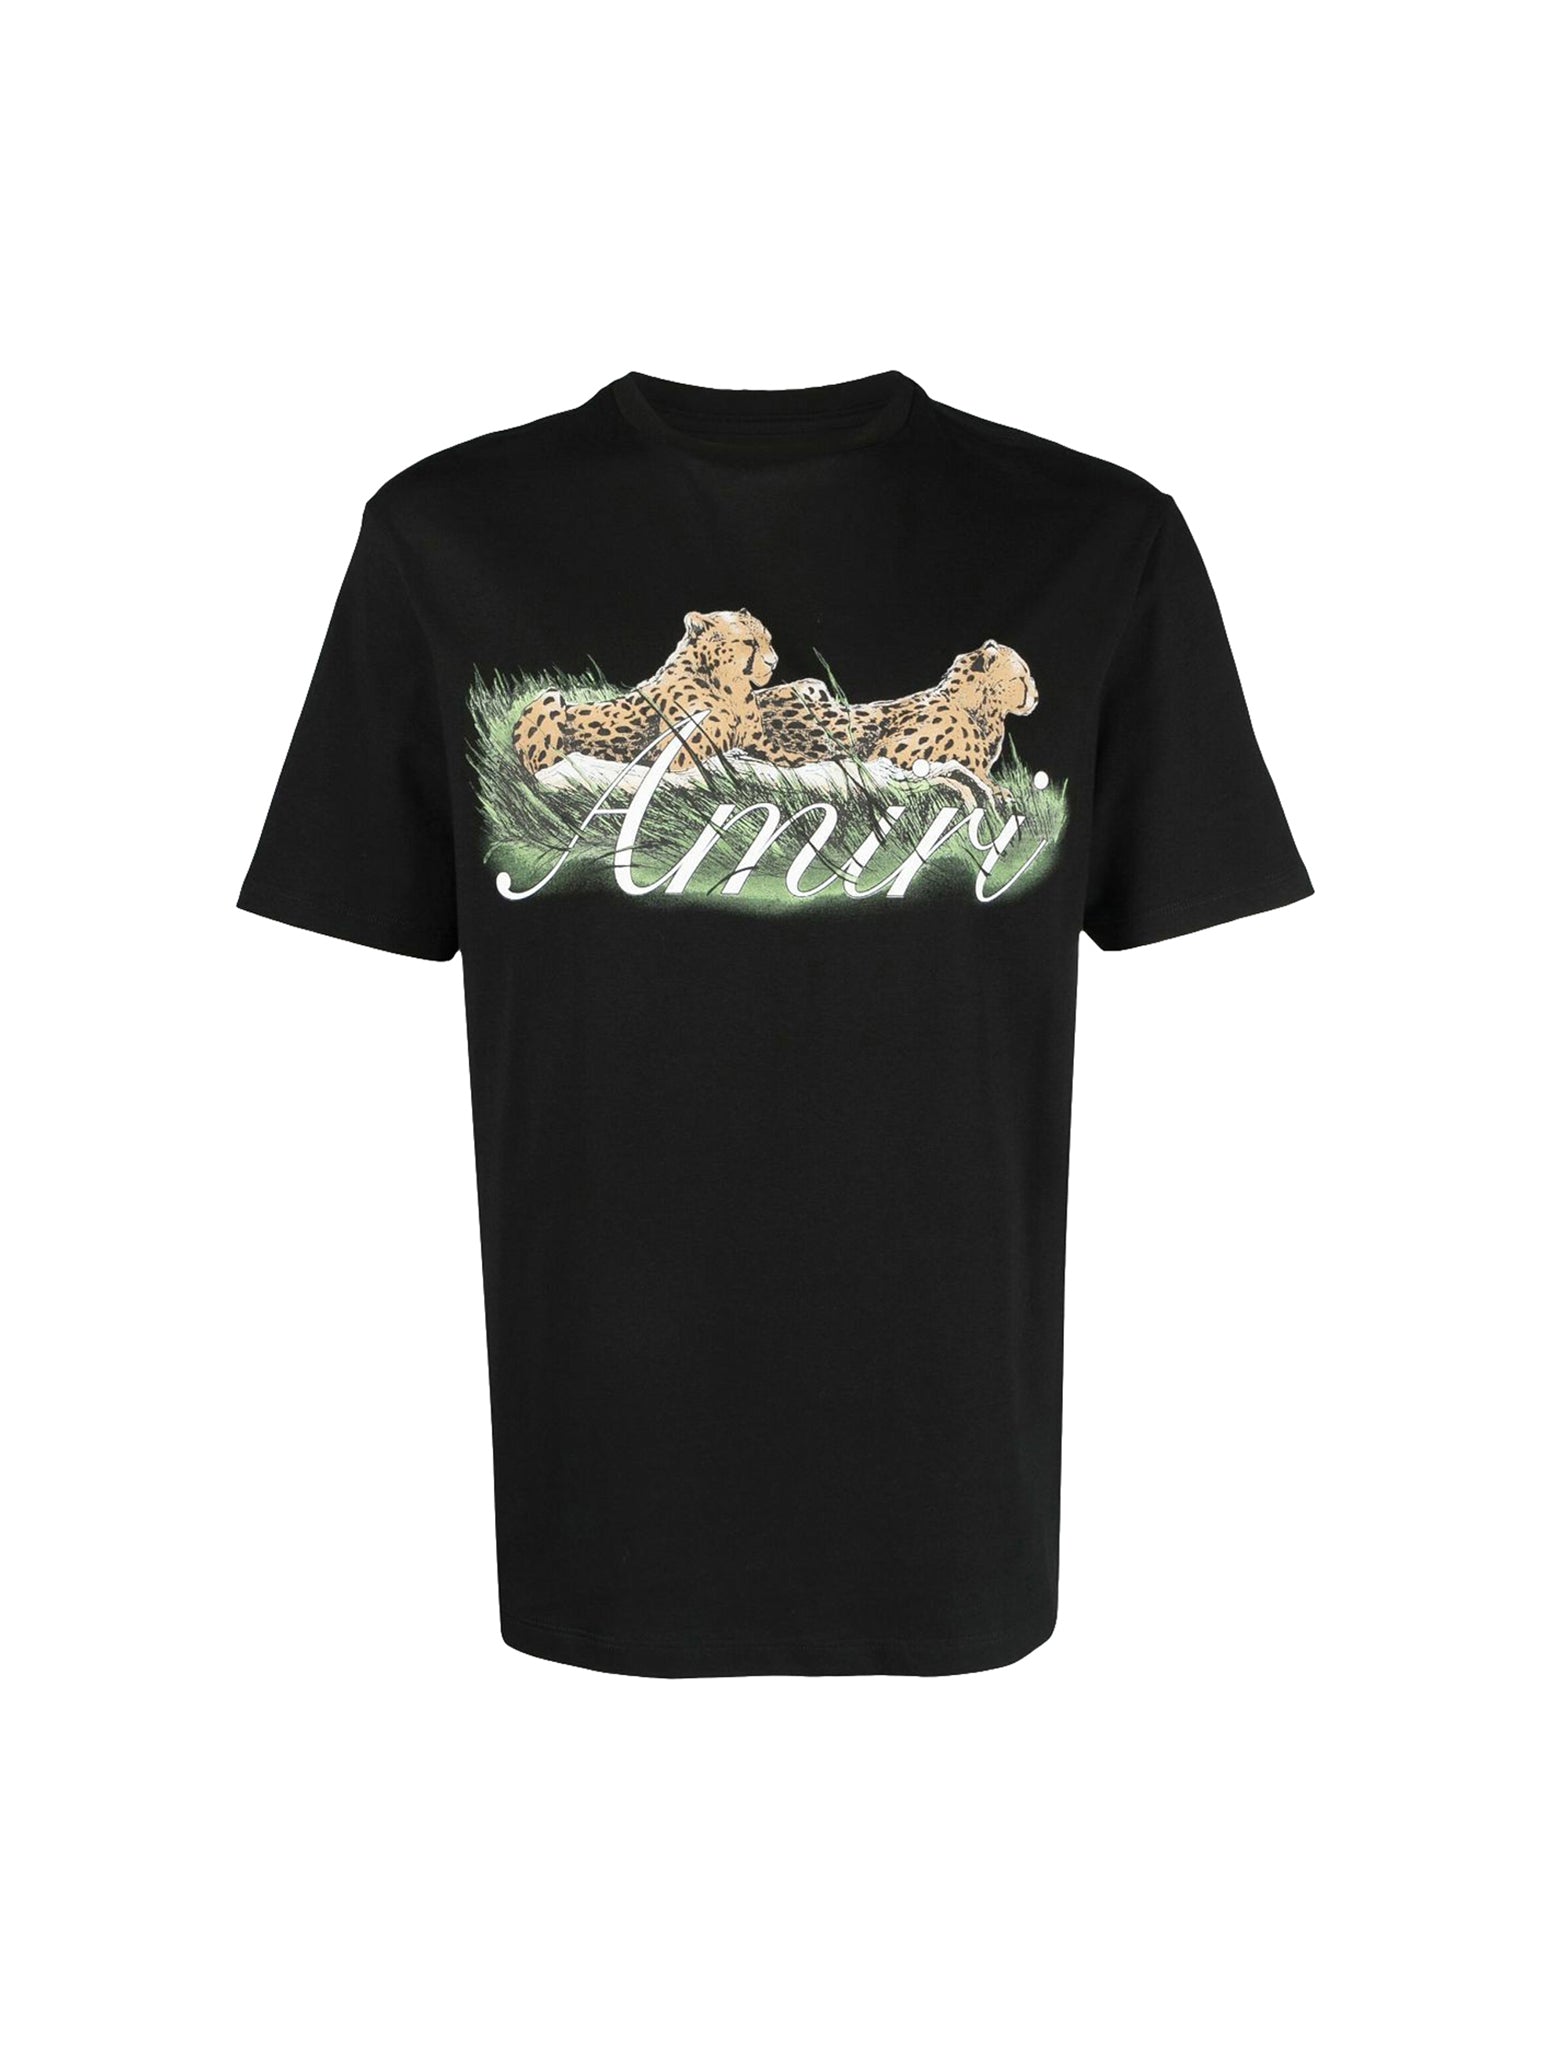 T-shirt con stampa del logo Cheetah